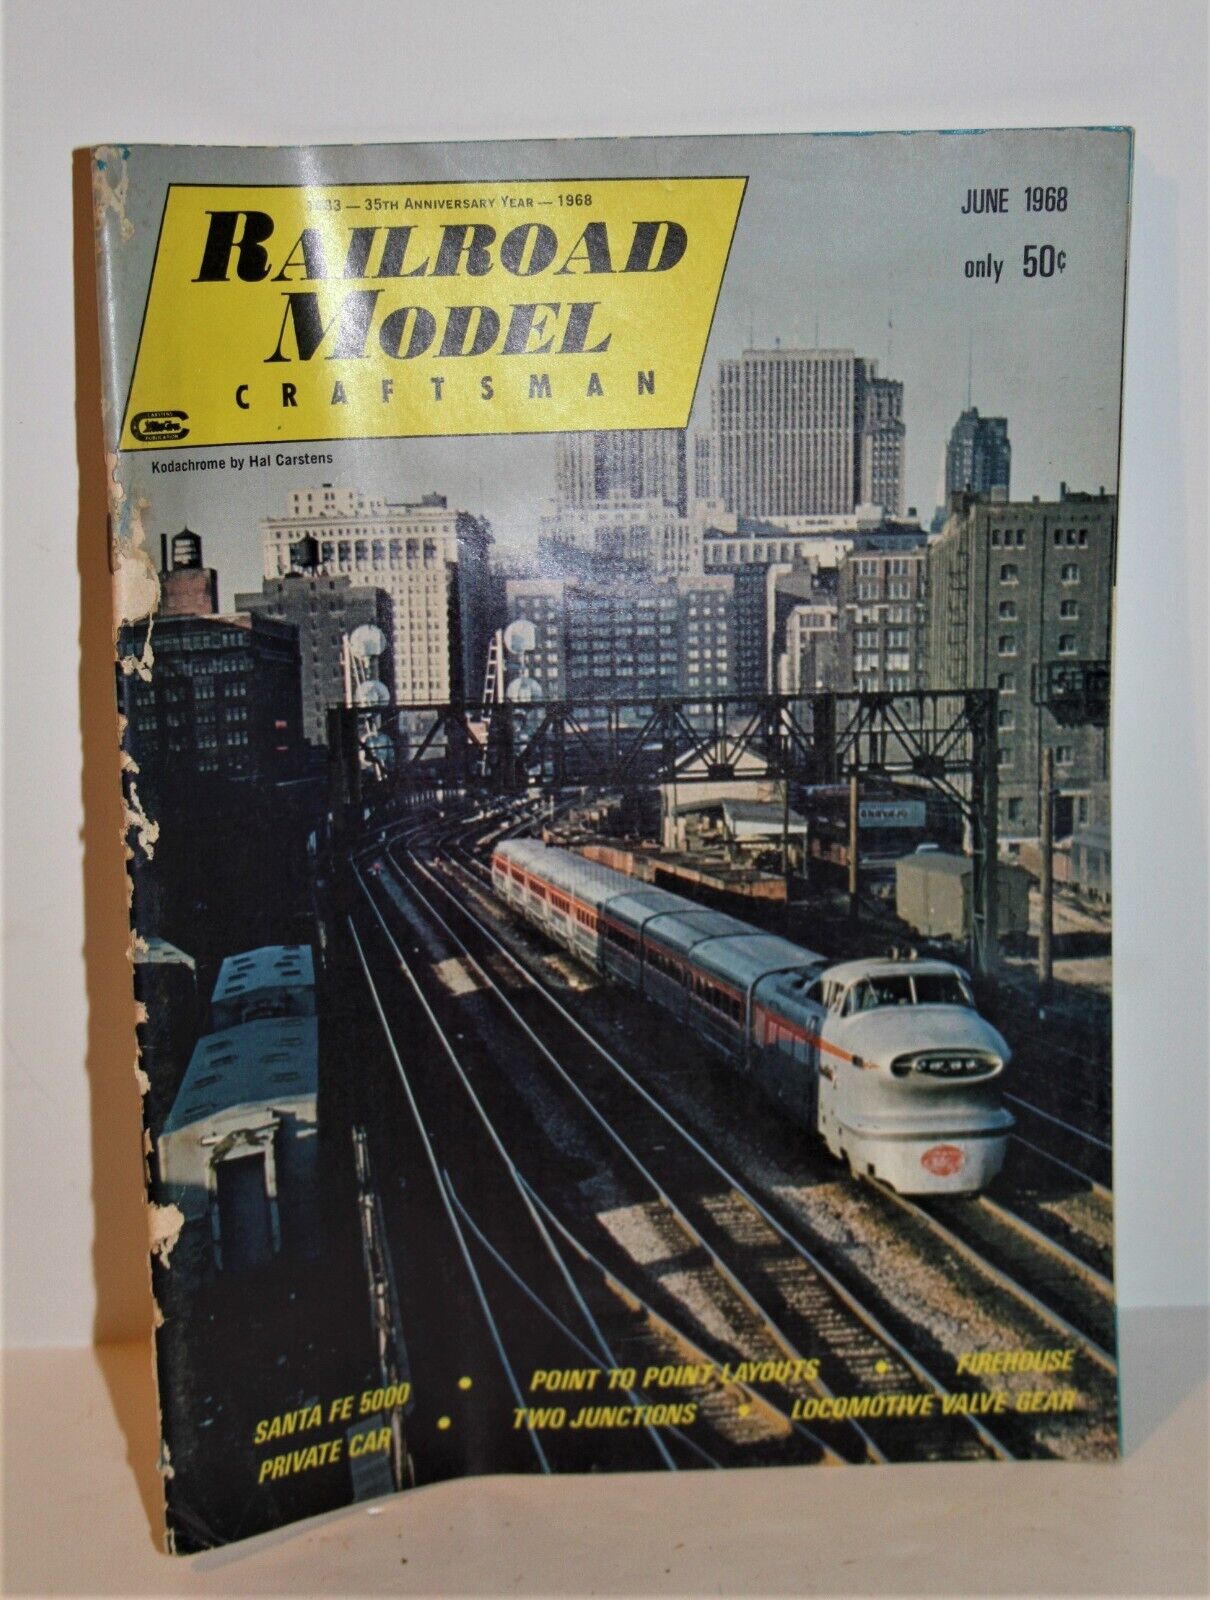 Vintage RAILROAD MODEL Craftsman JUNE 1968 MAGAZINE 35th Anniversary Edition